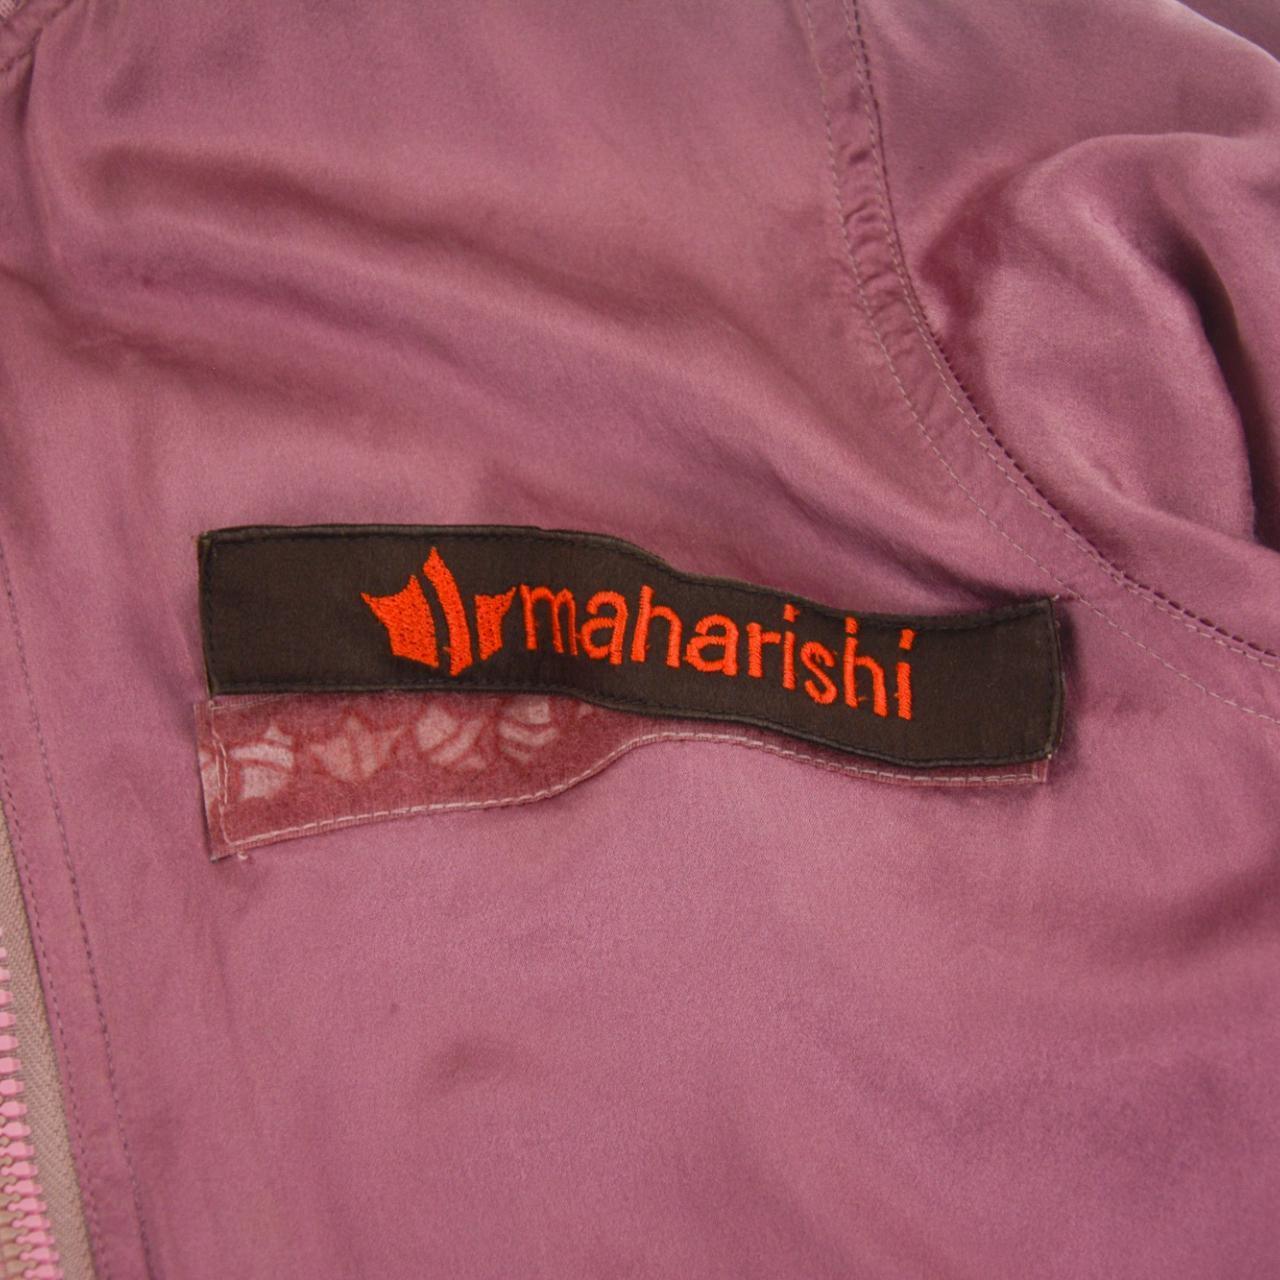 Vintage Maharishi Jacket Woman’s Size S - Known Source